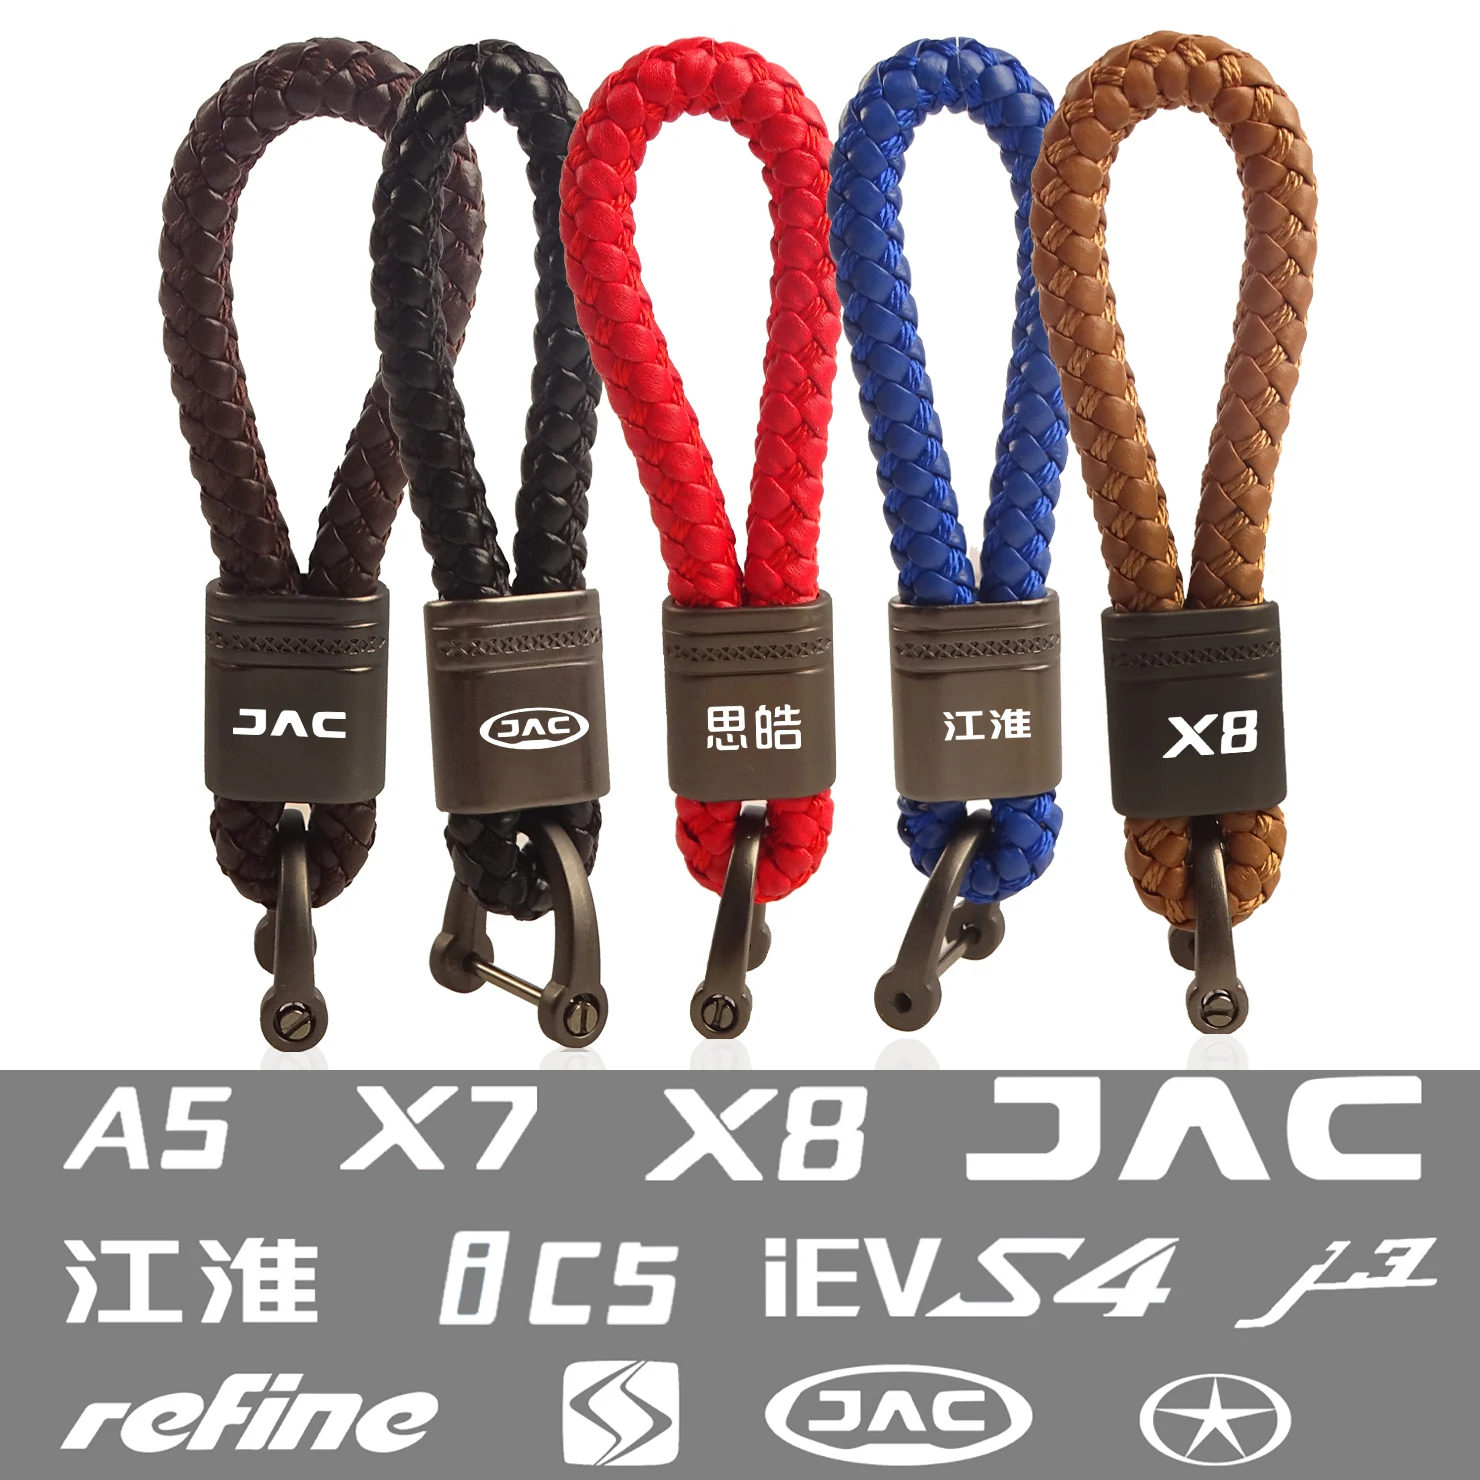 

Leather Metal leather car key chain keychain For JAC Refine Rein Sol J1 J2 J3 J3 Turin J4 J5 J6 J7 car Accessorie Car styling